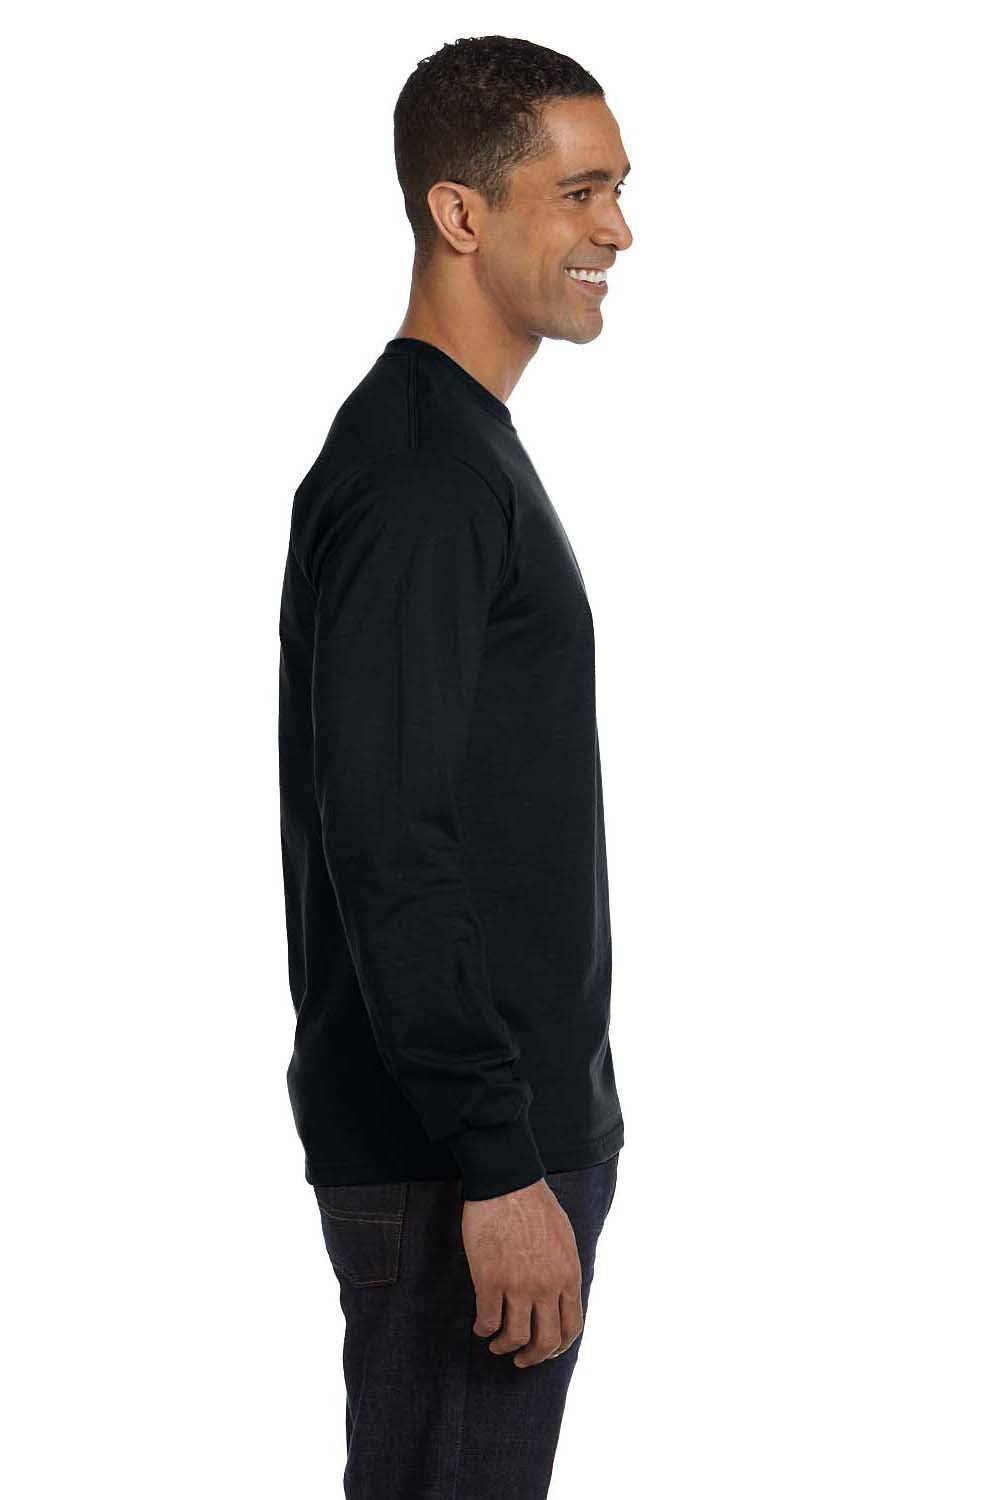 Hanes 5286 Mens ComfortSoft Long Sleeve Crewneck T-Shirt Black Side